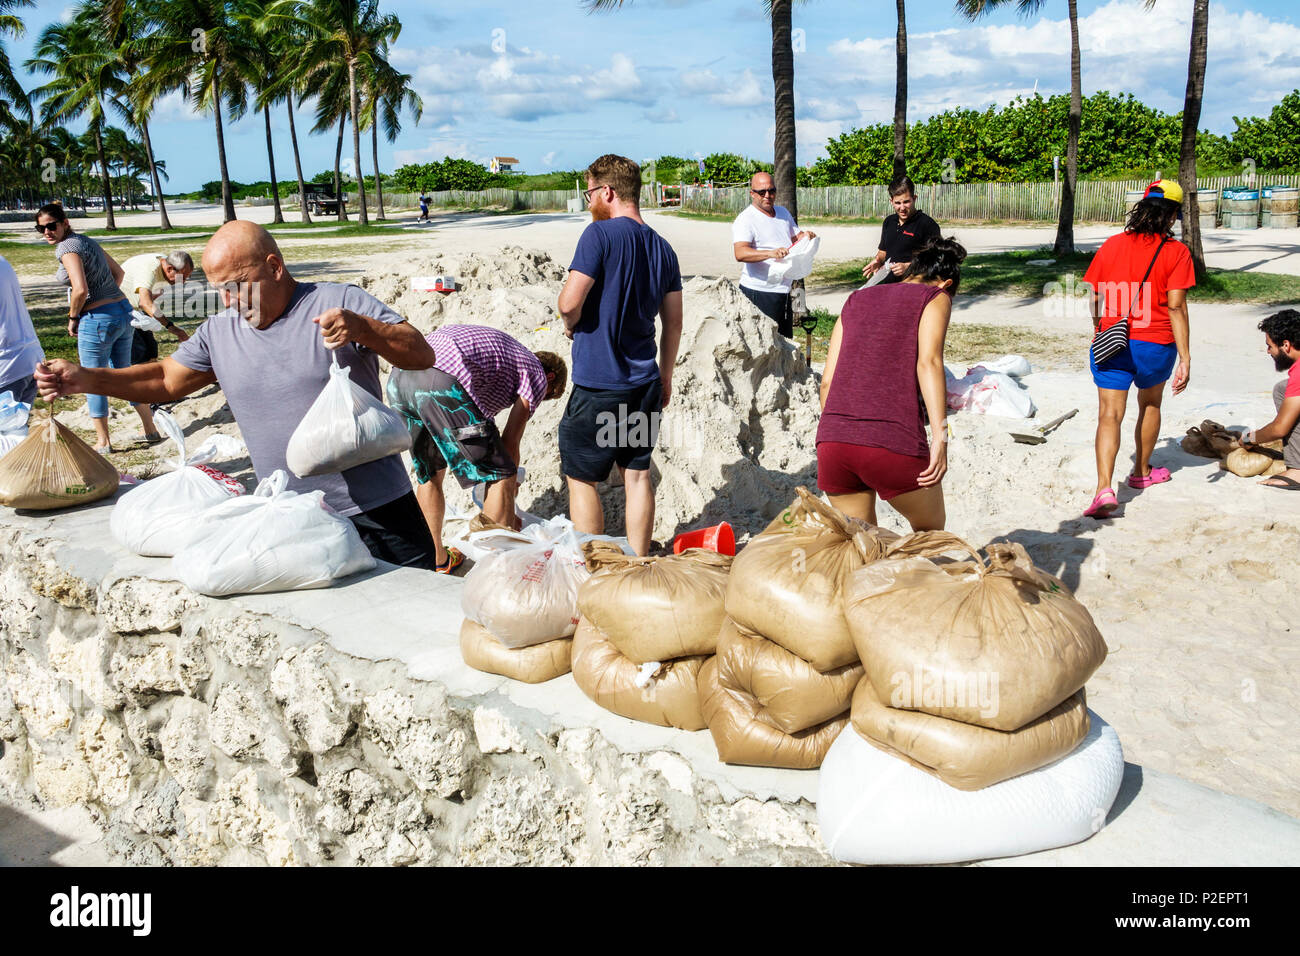 Florida, FL South, Miami Beach, kostenlose Sandsäcke, der Sturmflut Irma, Vorbereitung, Hochwasserschutz, Freiwillige Freiwillige Gemeinde Freiwilligendienst Freiwillige Arbeit Arbeiter wo Stockfoto